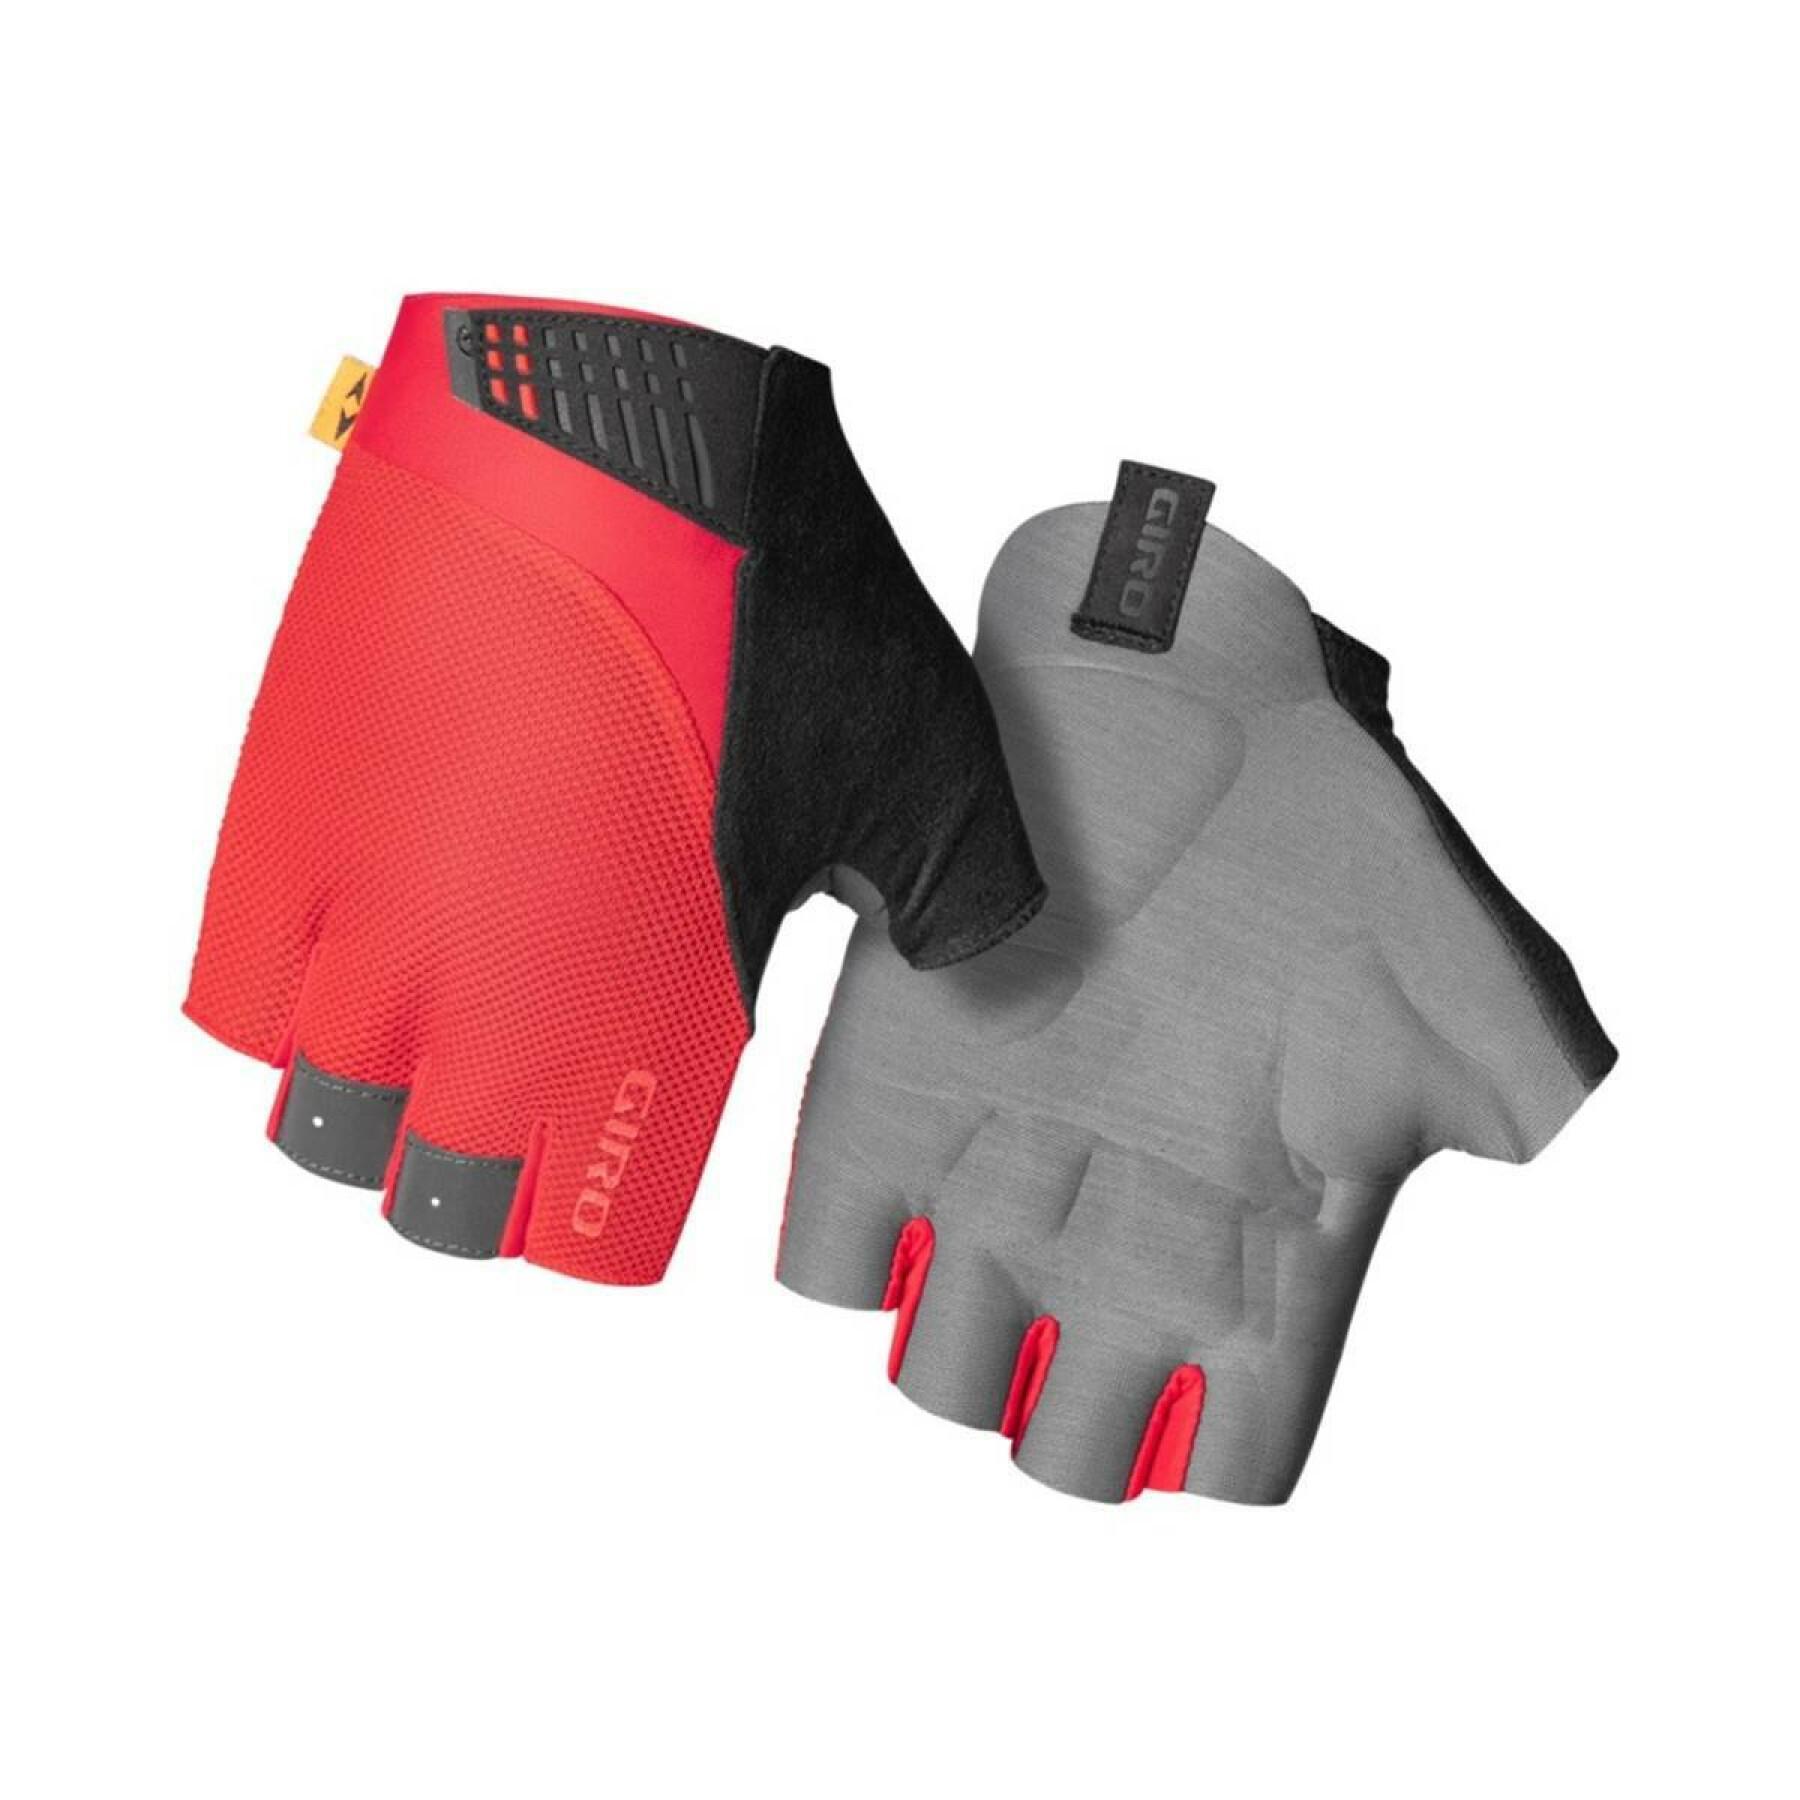 Kurze Handschuhe Giro Supernatural - Handschuhen - Ausrüstung - Rennrad